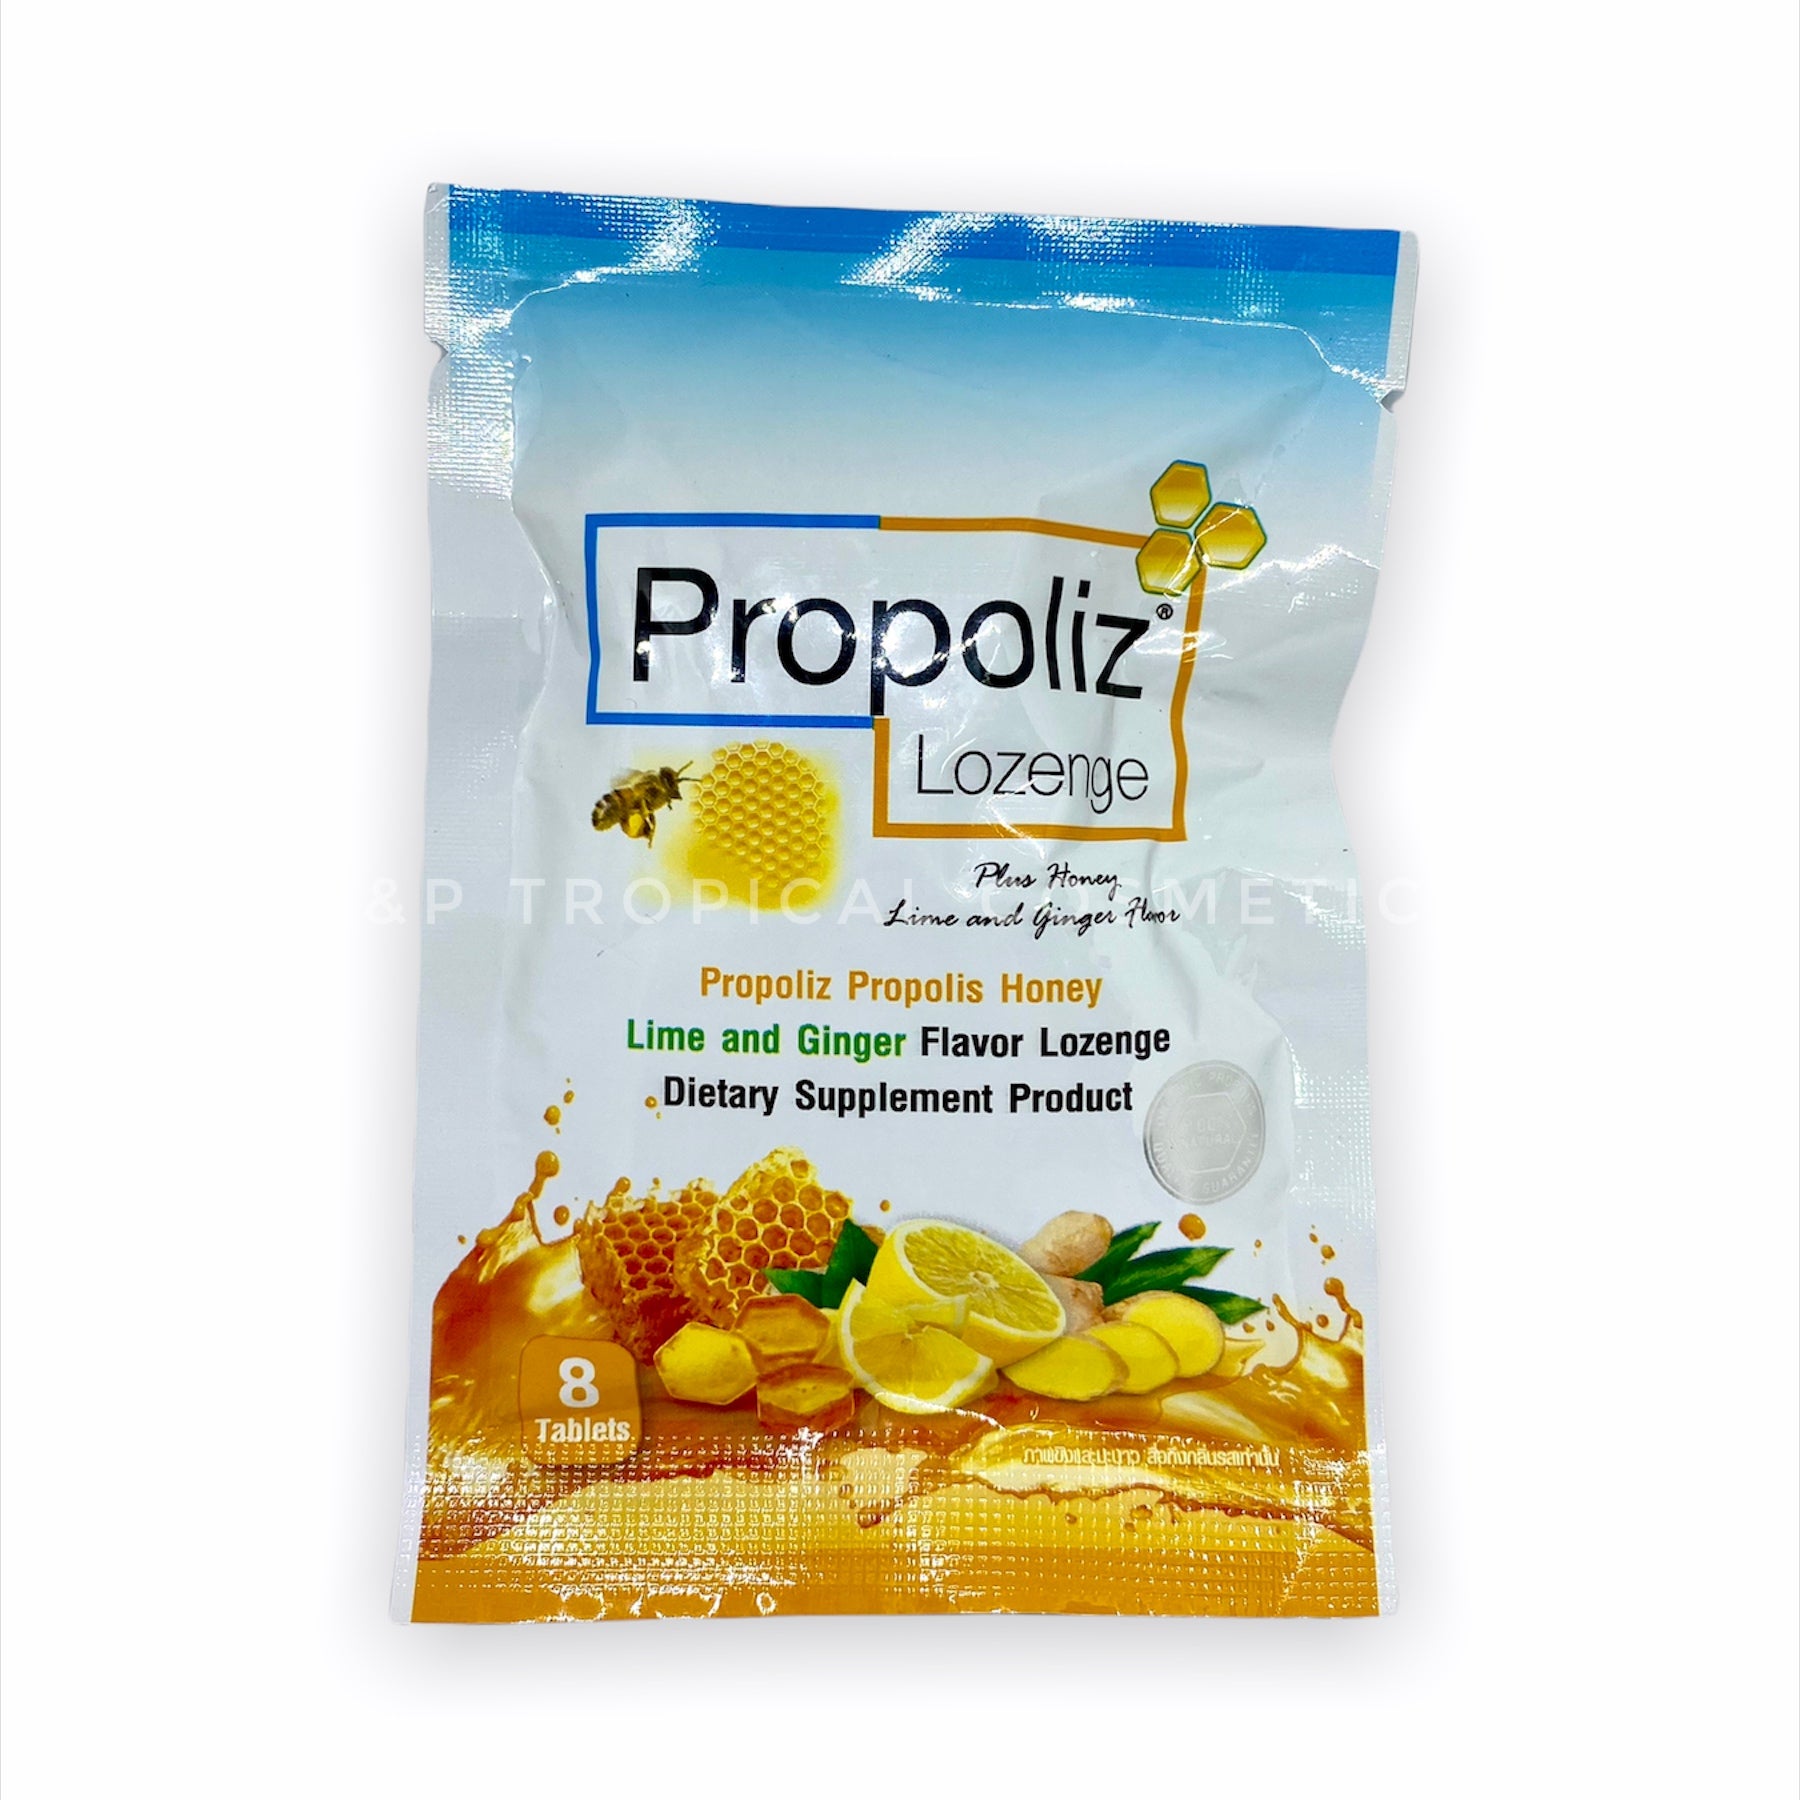 T.Man Pharma Propoliz Lozenge Honey Lime and Ginger 8 Tablets, Леденцы с прополисом, медом, имбирем и лаймом 8 шт.